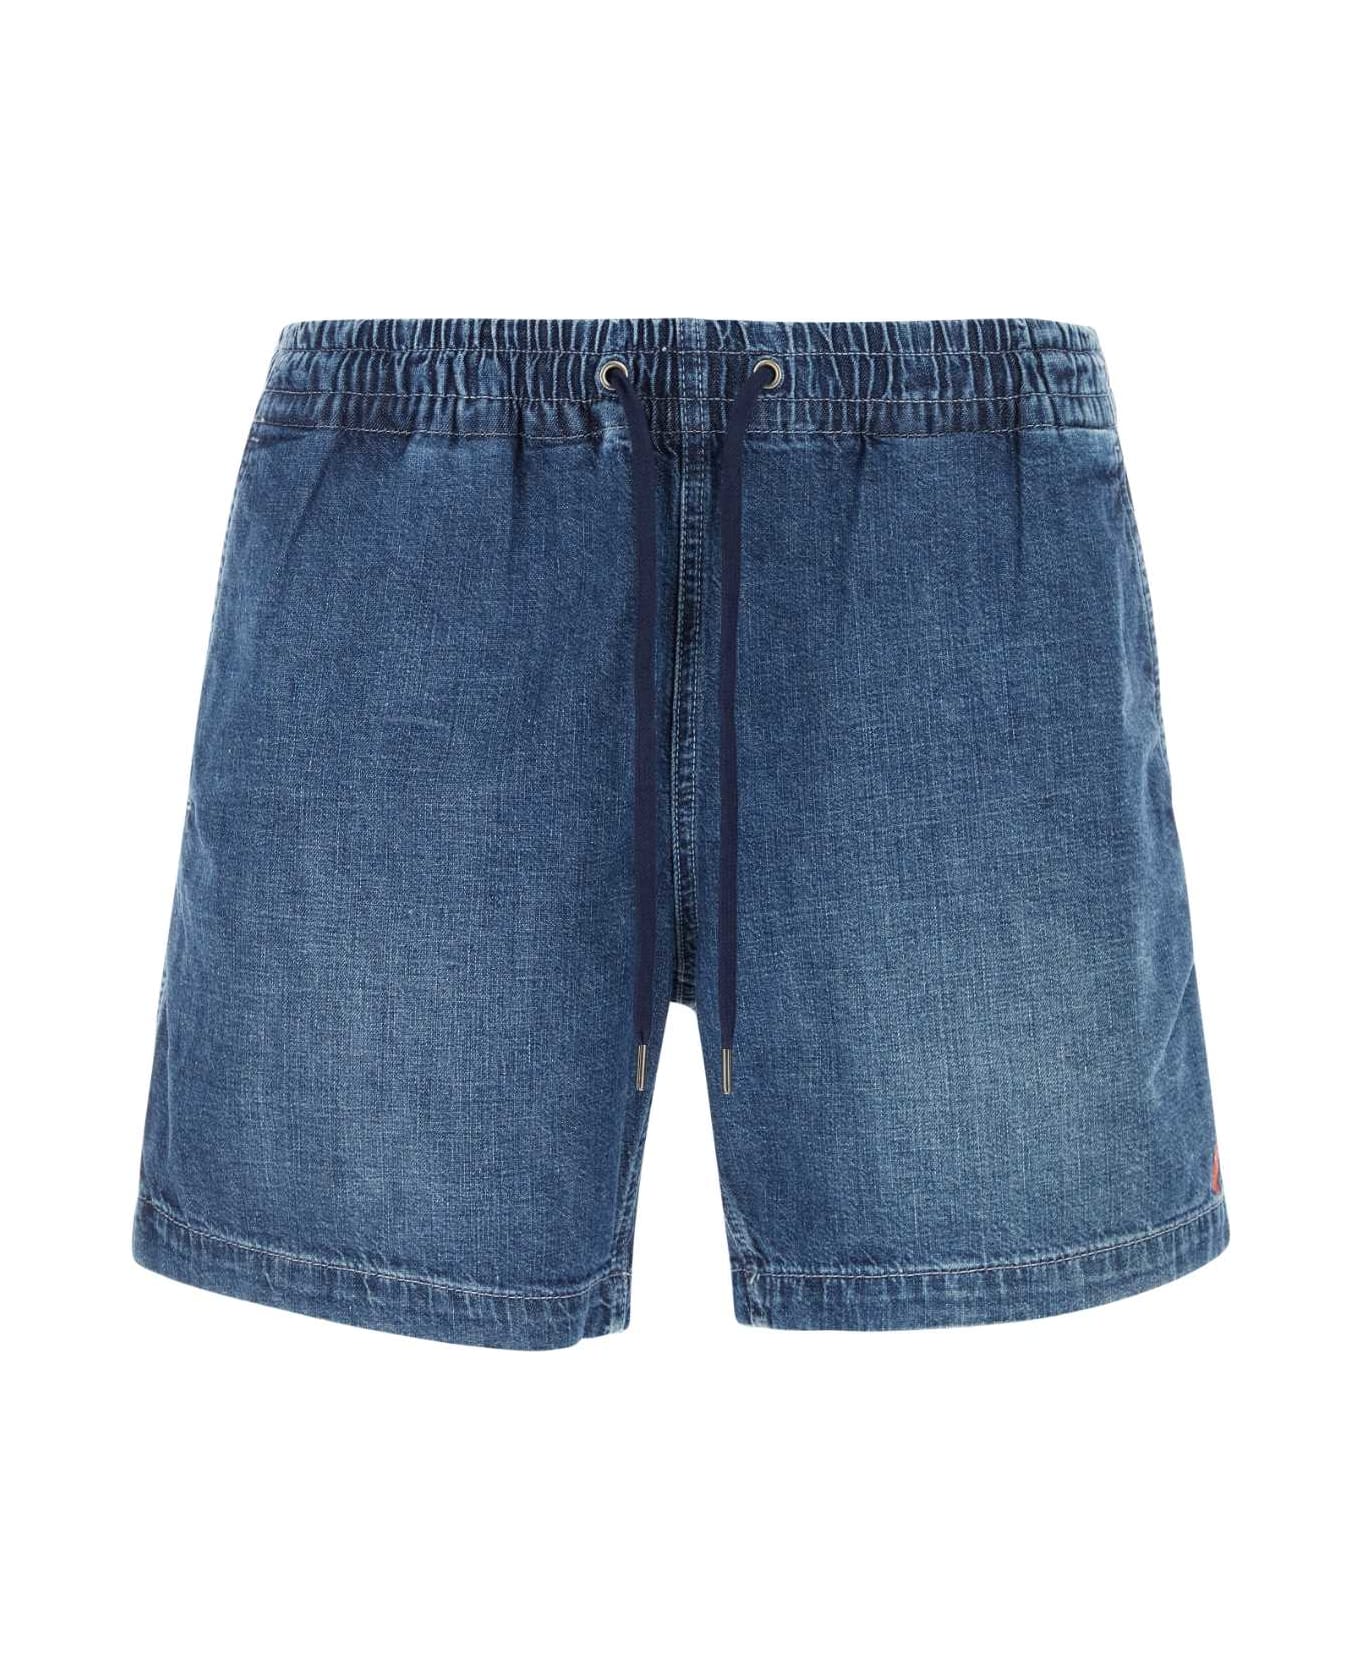 Polo Ralph Lauren Denim Bermuda Shorts - 001